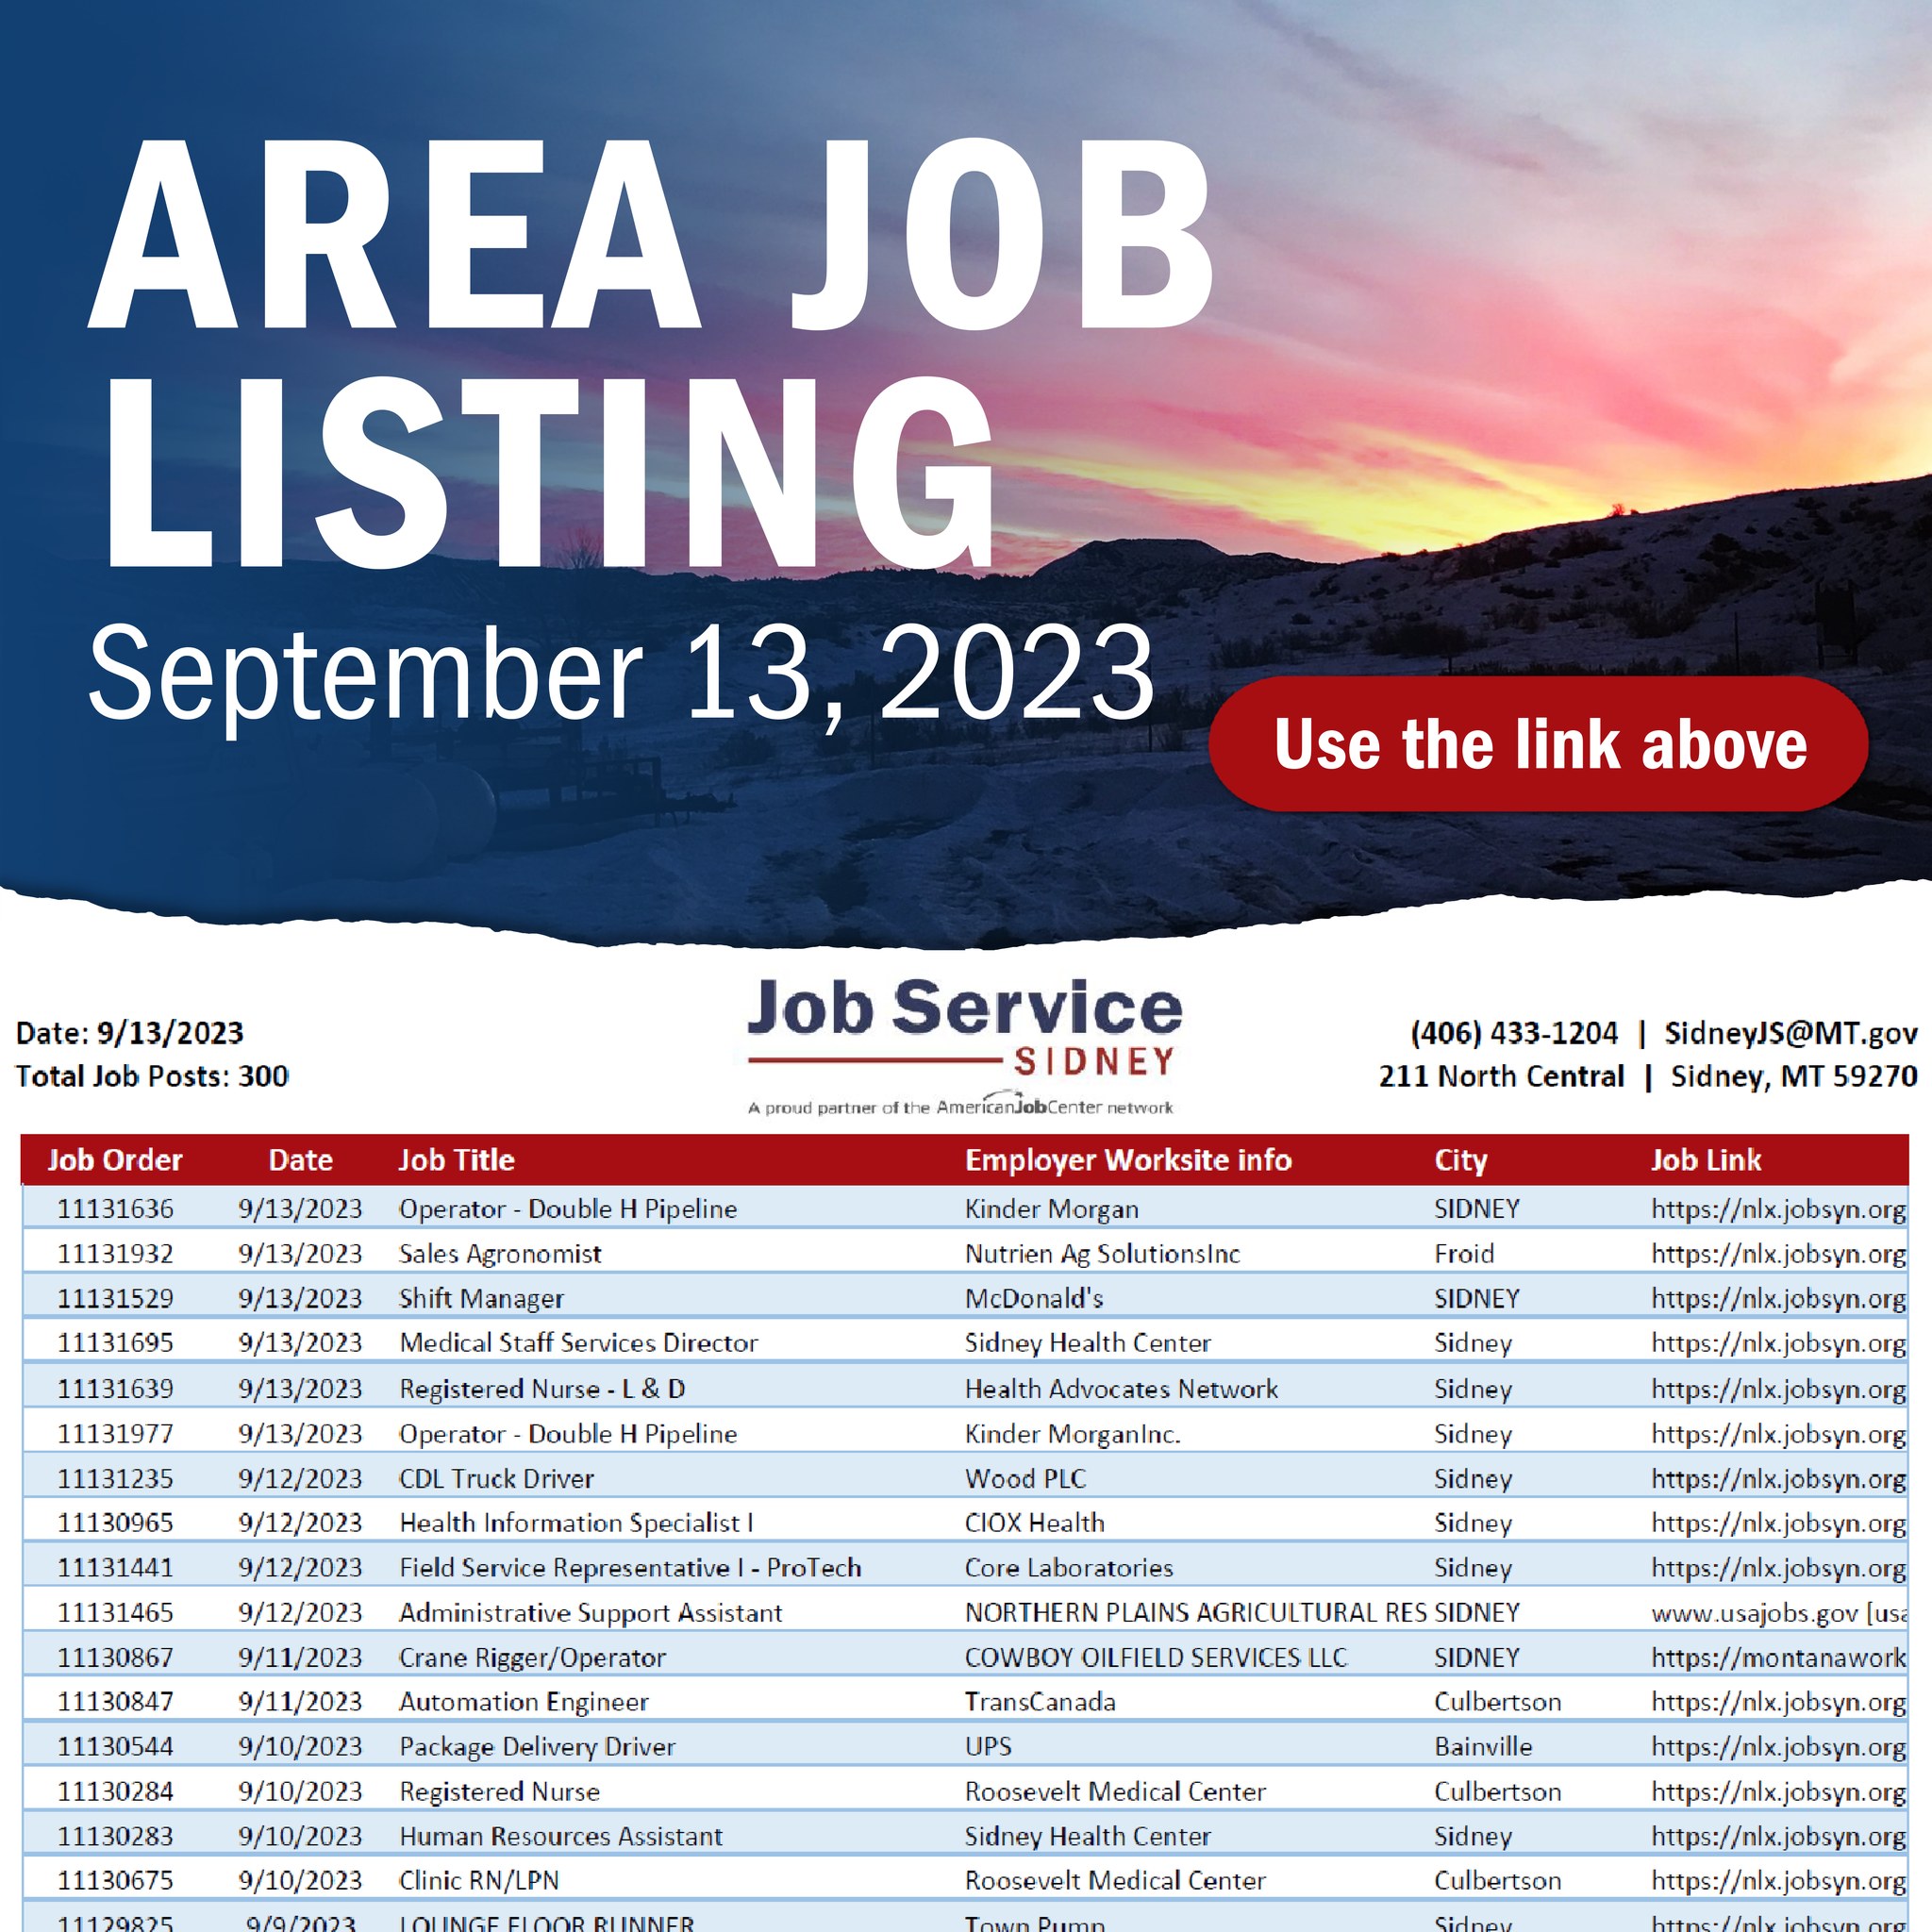 Sidney Job Service 211 N Central Ave, Sidney Montana 59270